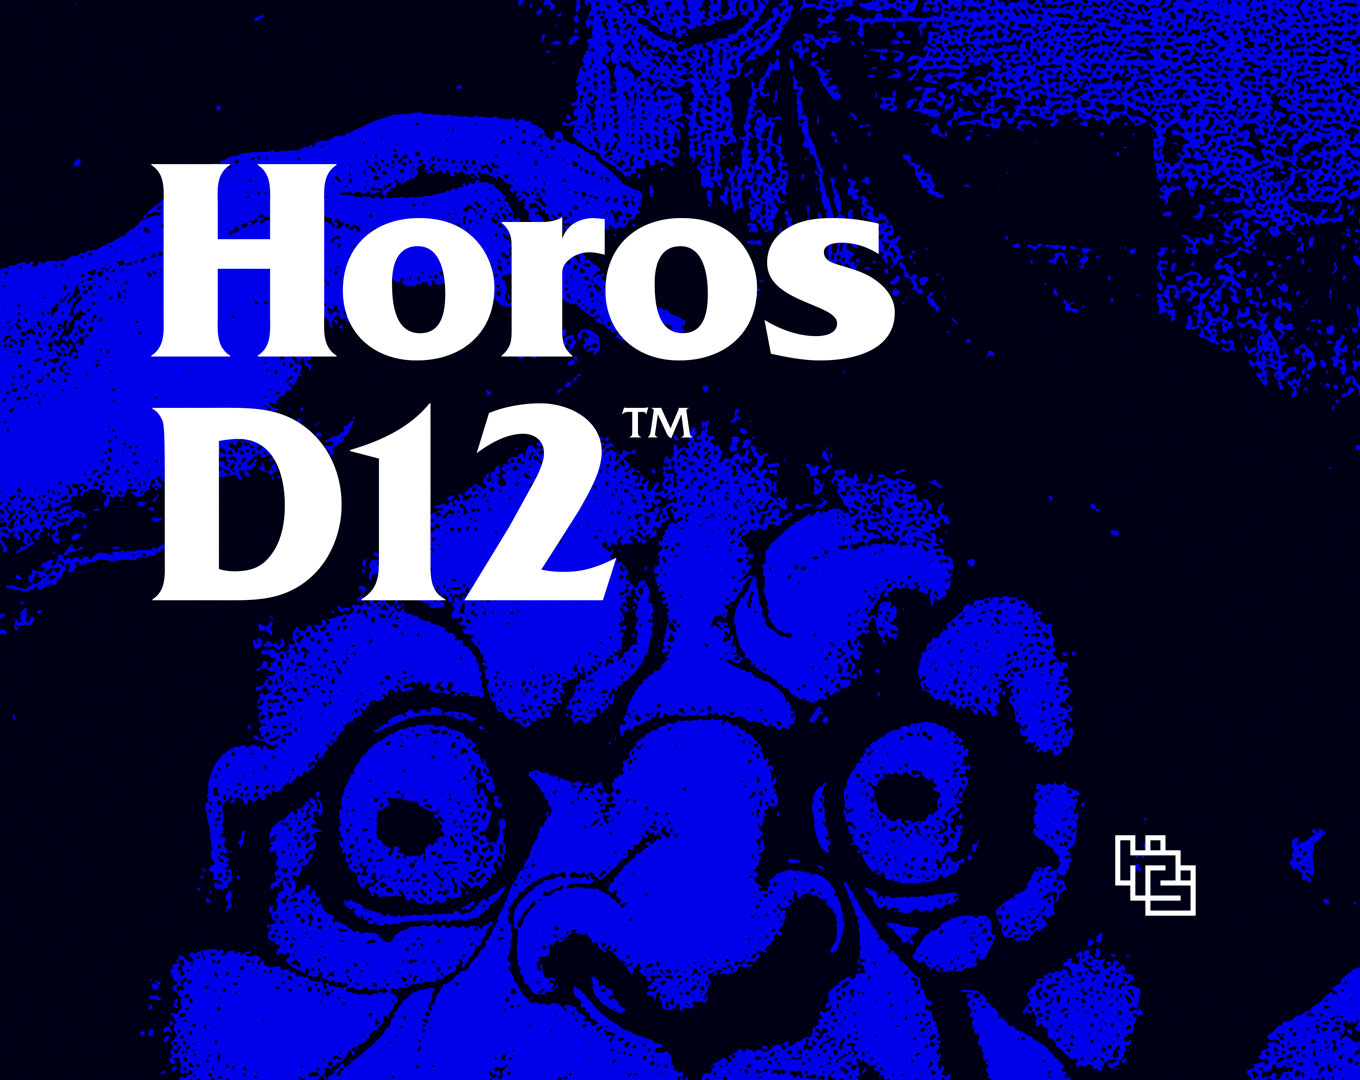 Horos D12™